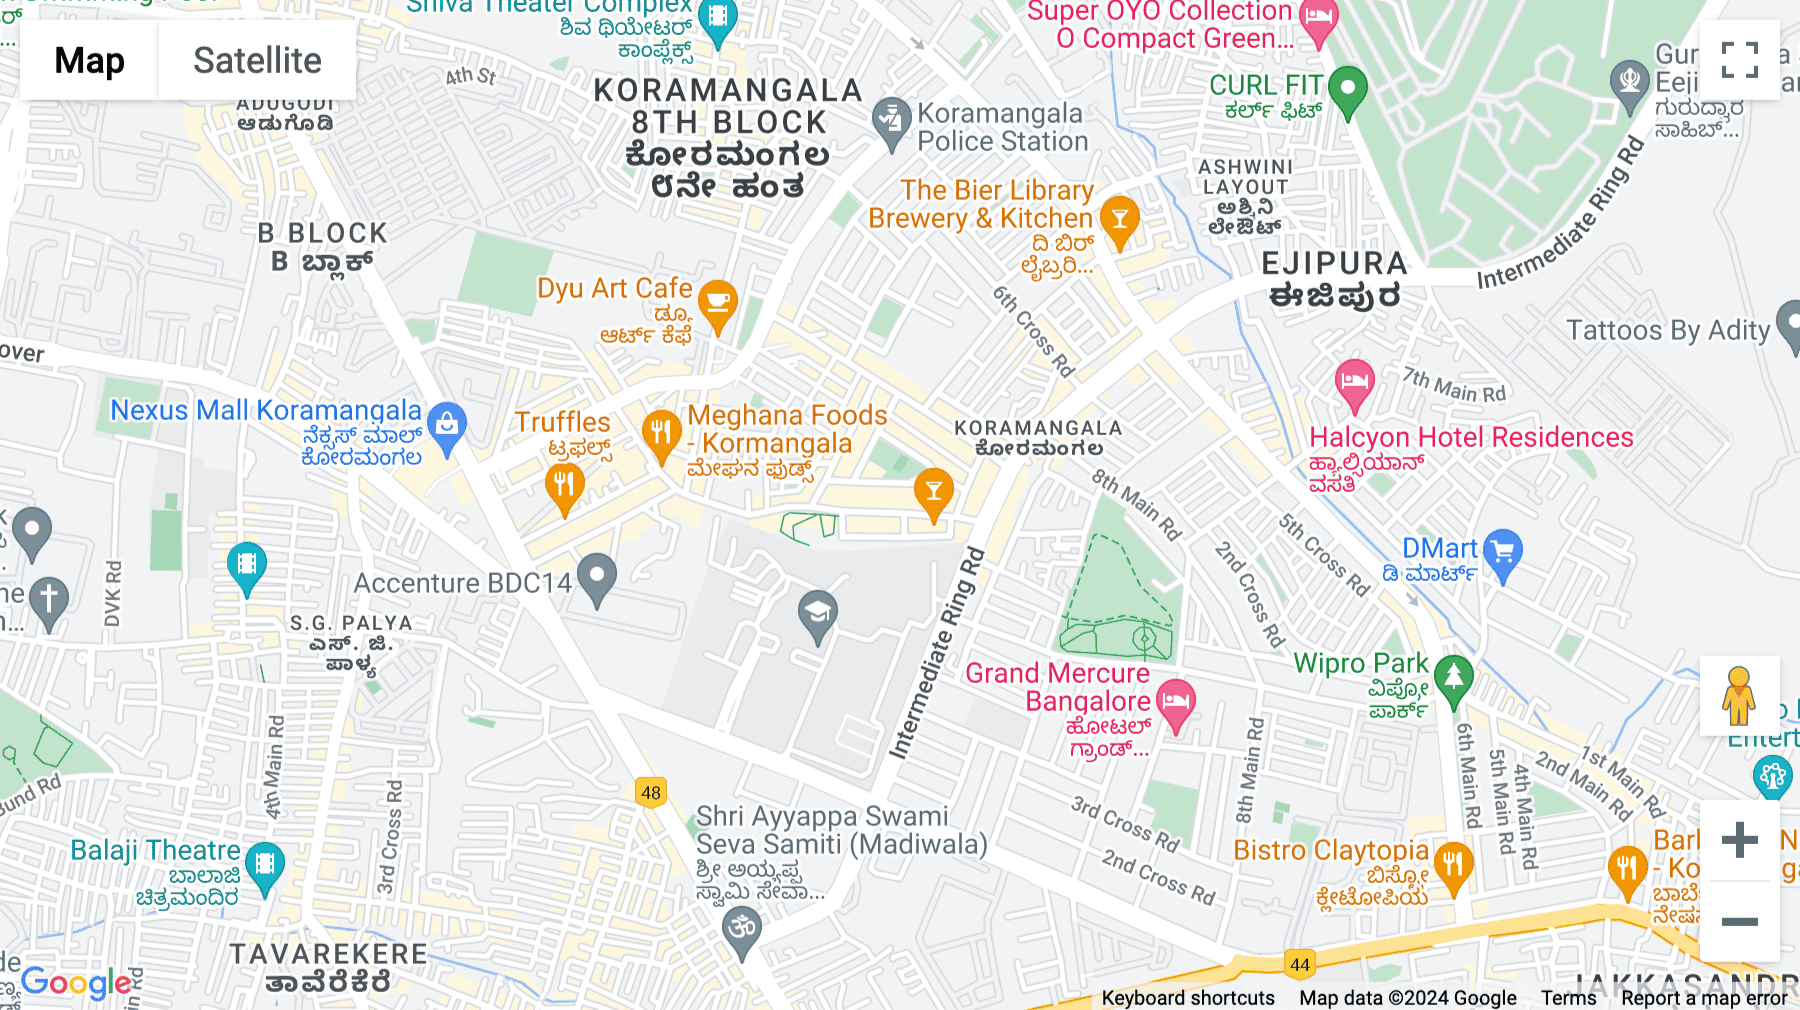 Click for interative map of 136, 1st Cross, 5th Block, Koramangala, Bangalore